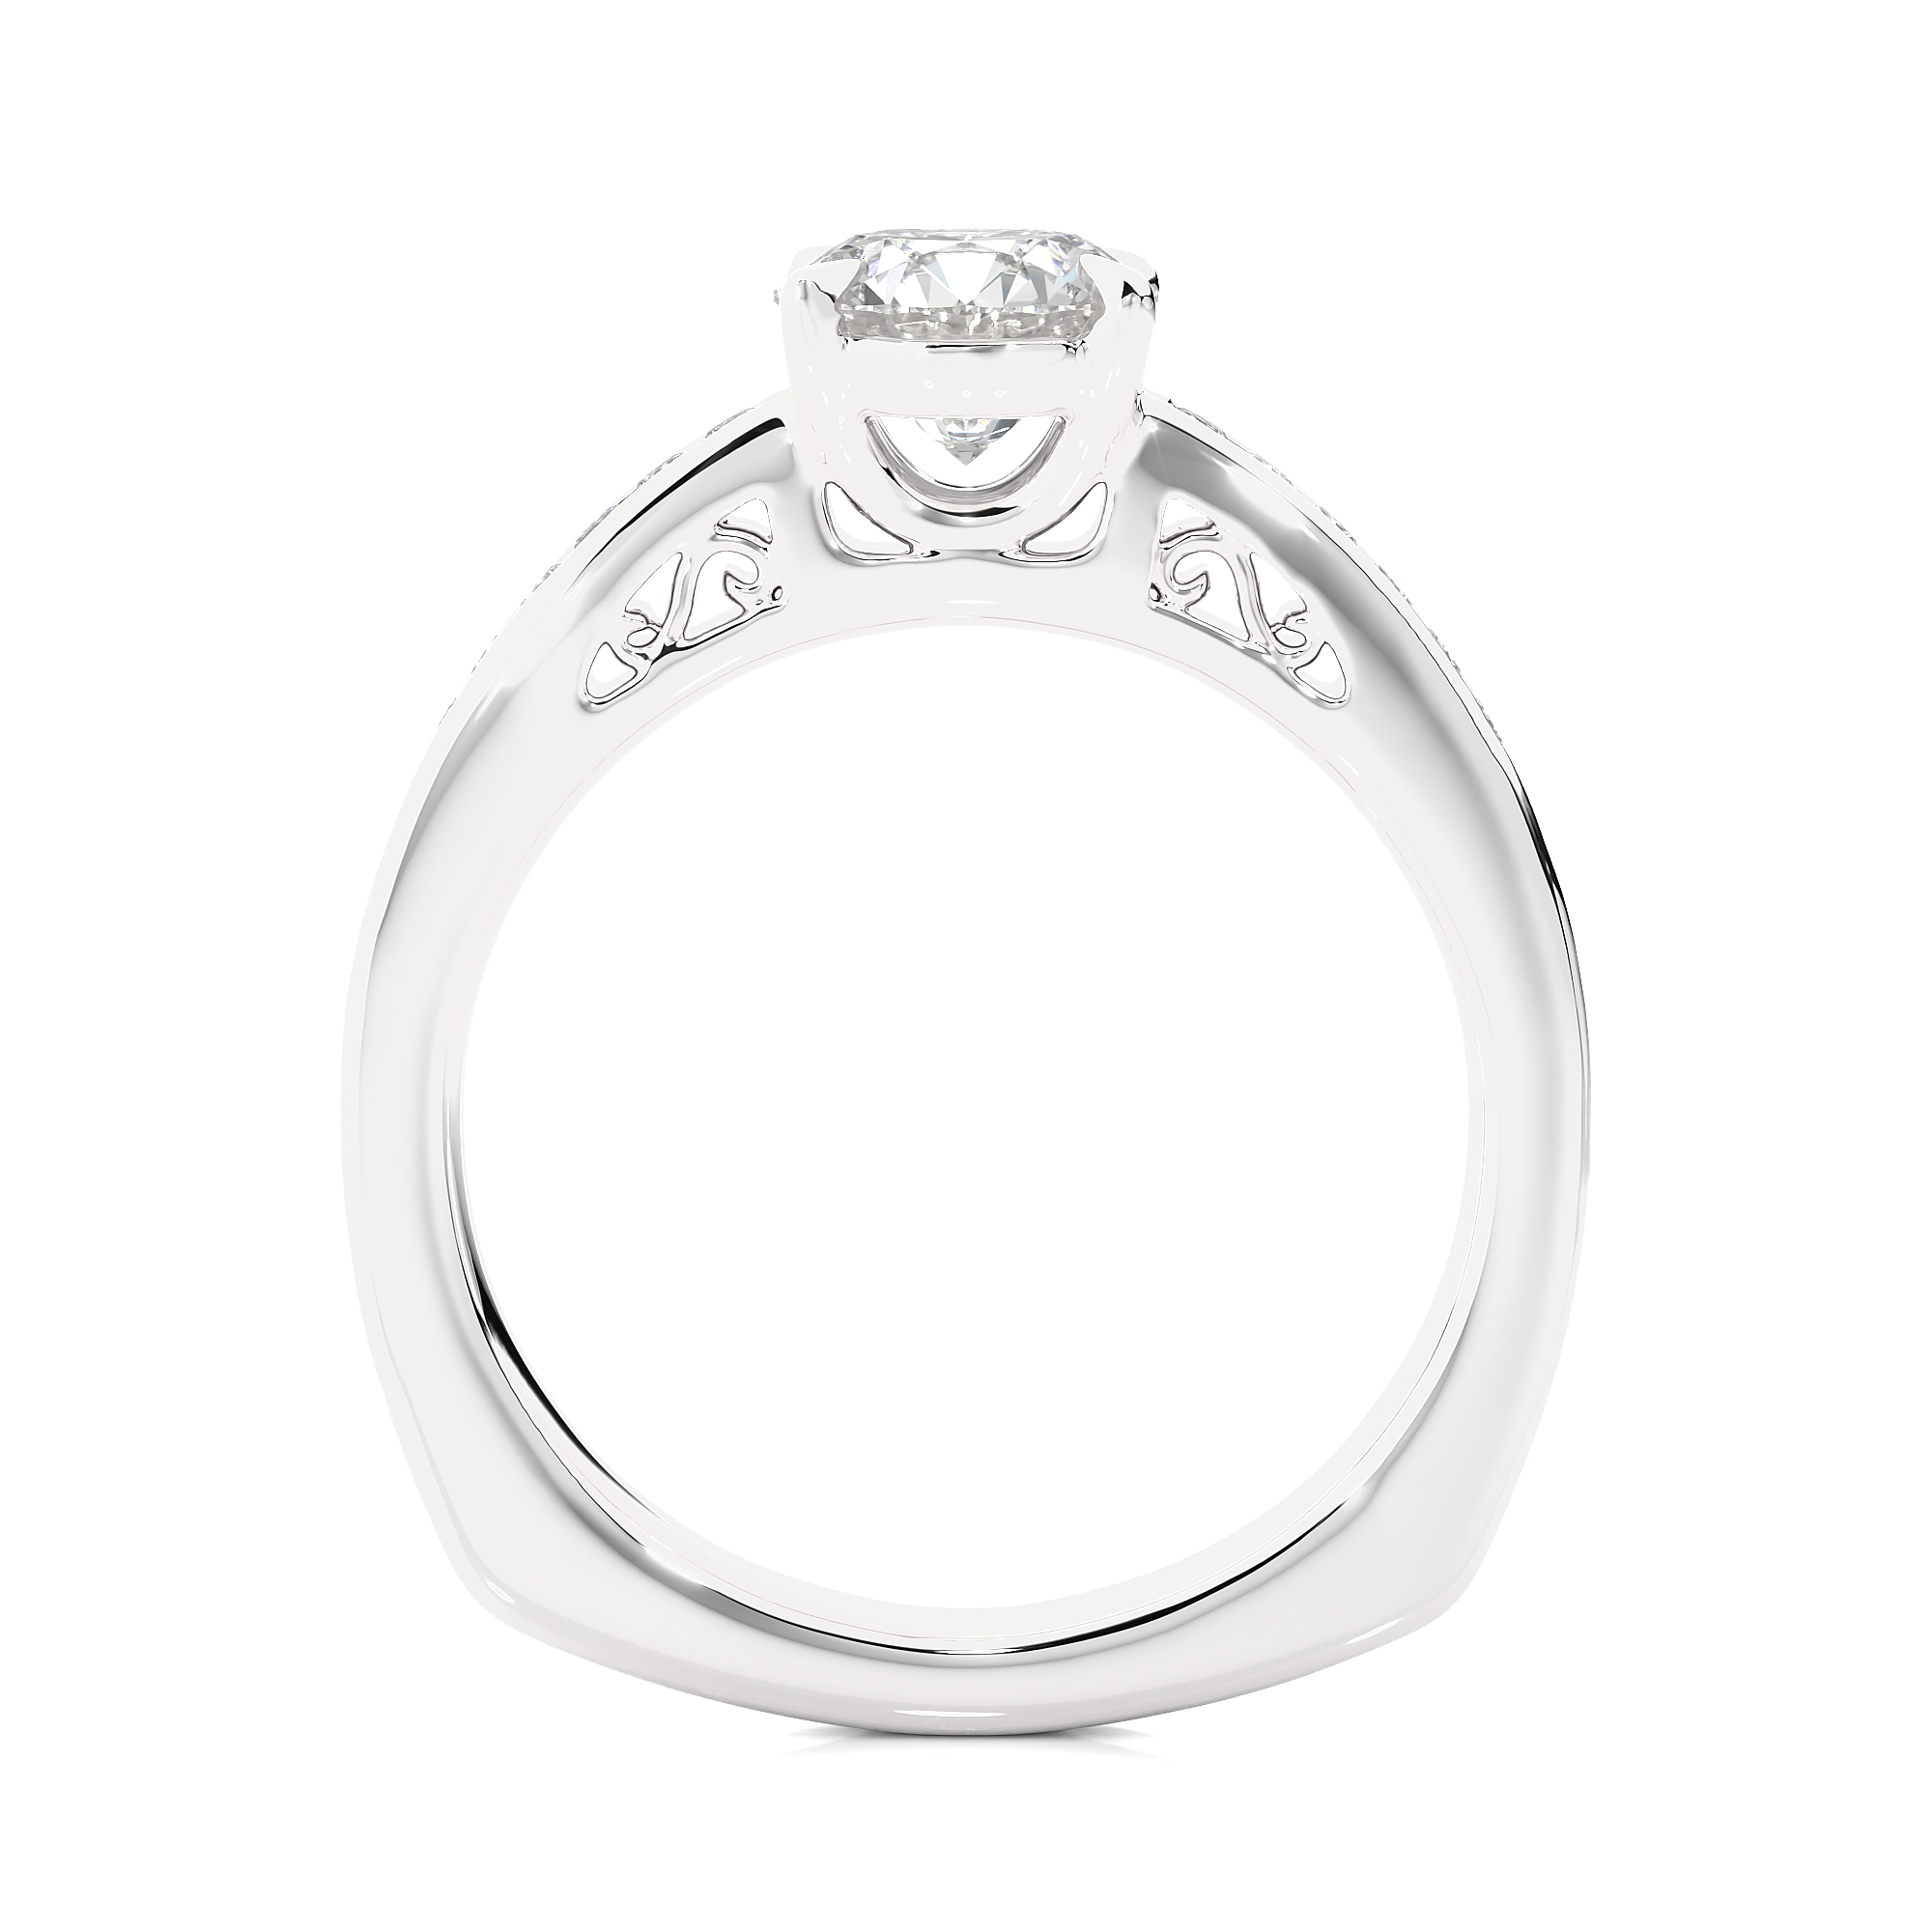 1.27Ct Solitaire Round Cut Diamond Ring in 14Kt White Gold - Blu Diamonds